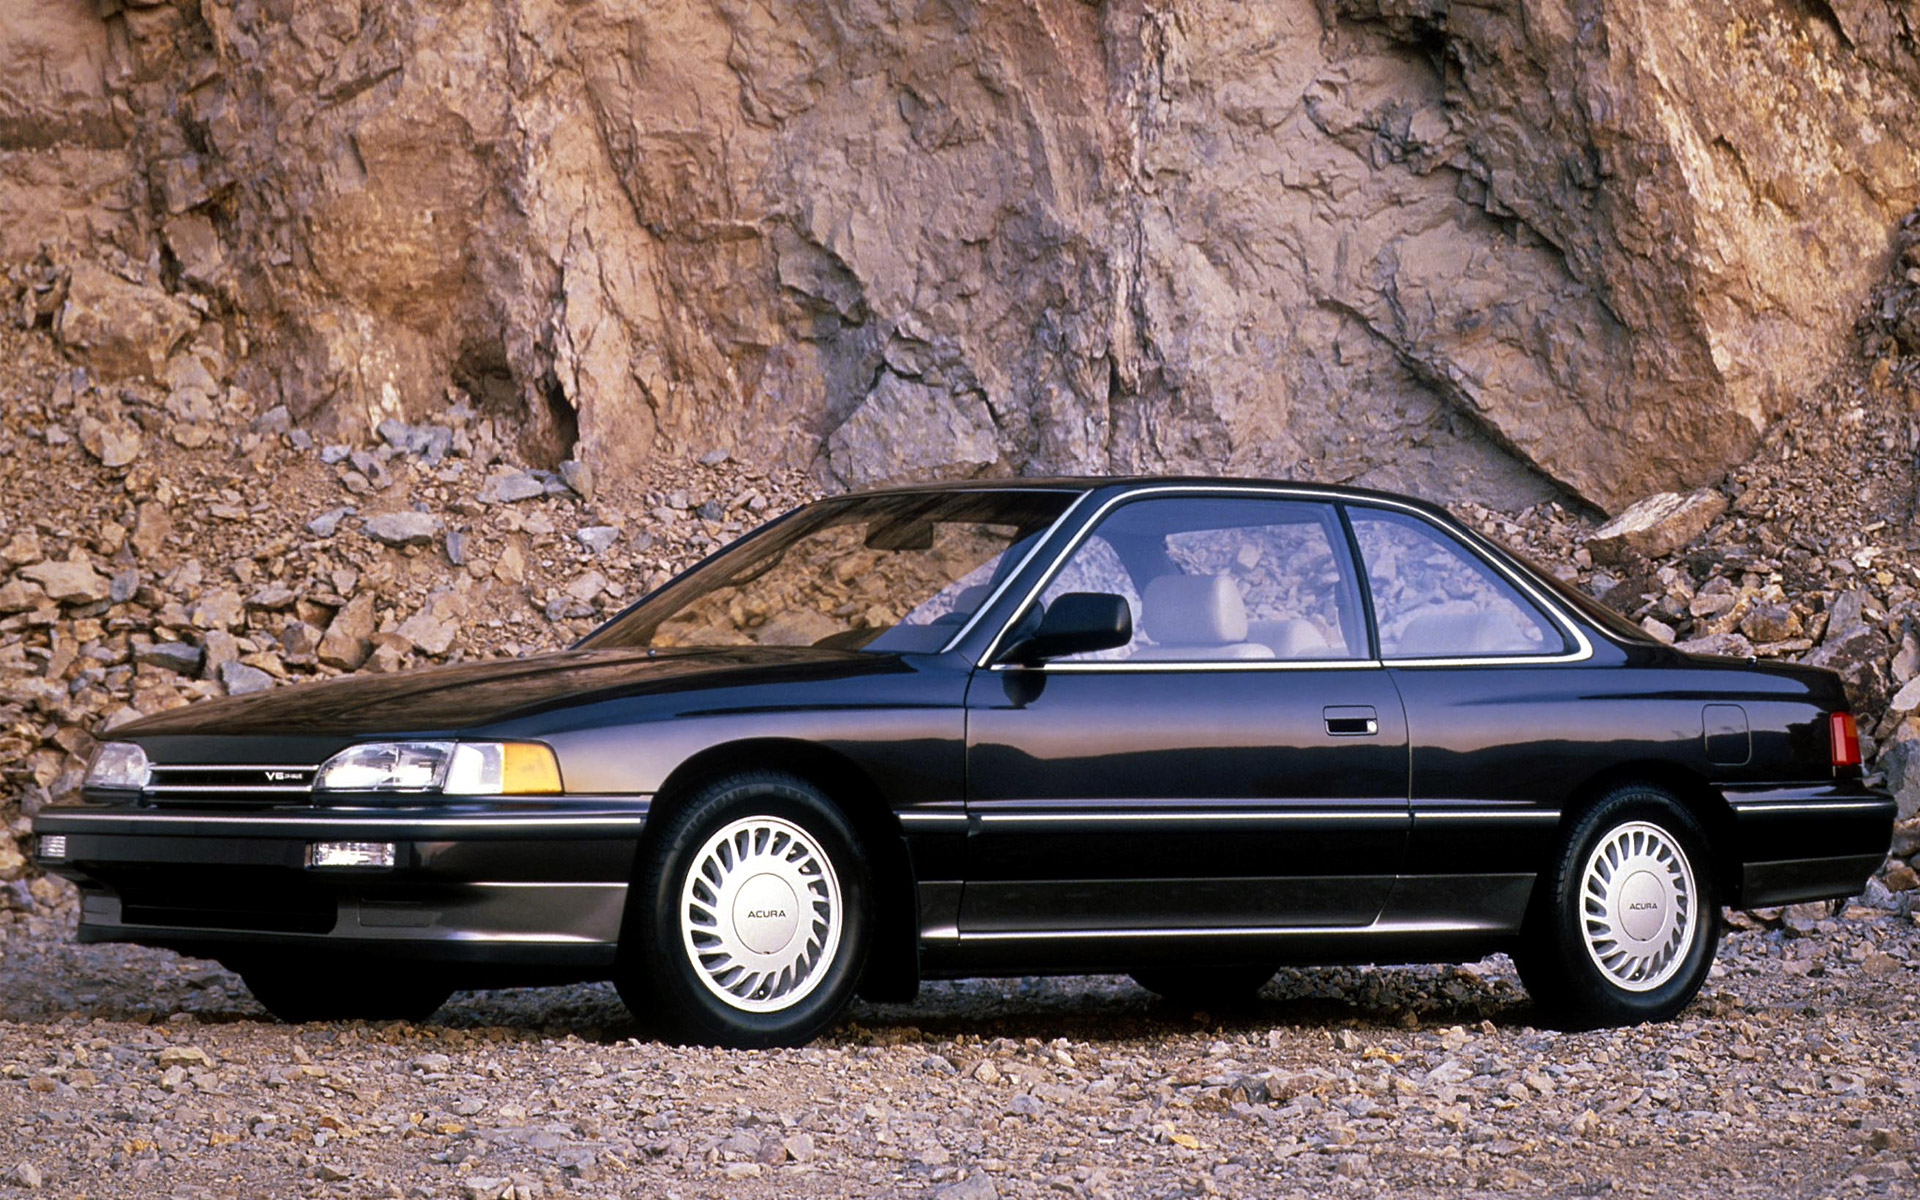  1988 Acura Legend Coupe Wallpaper.